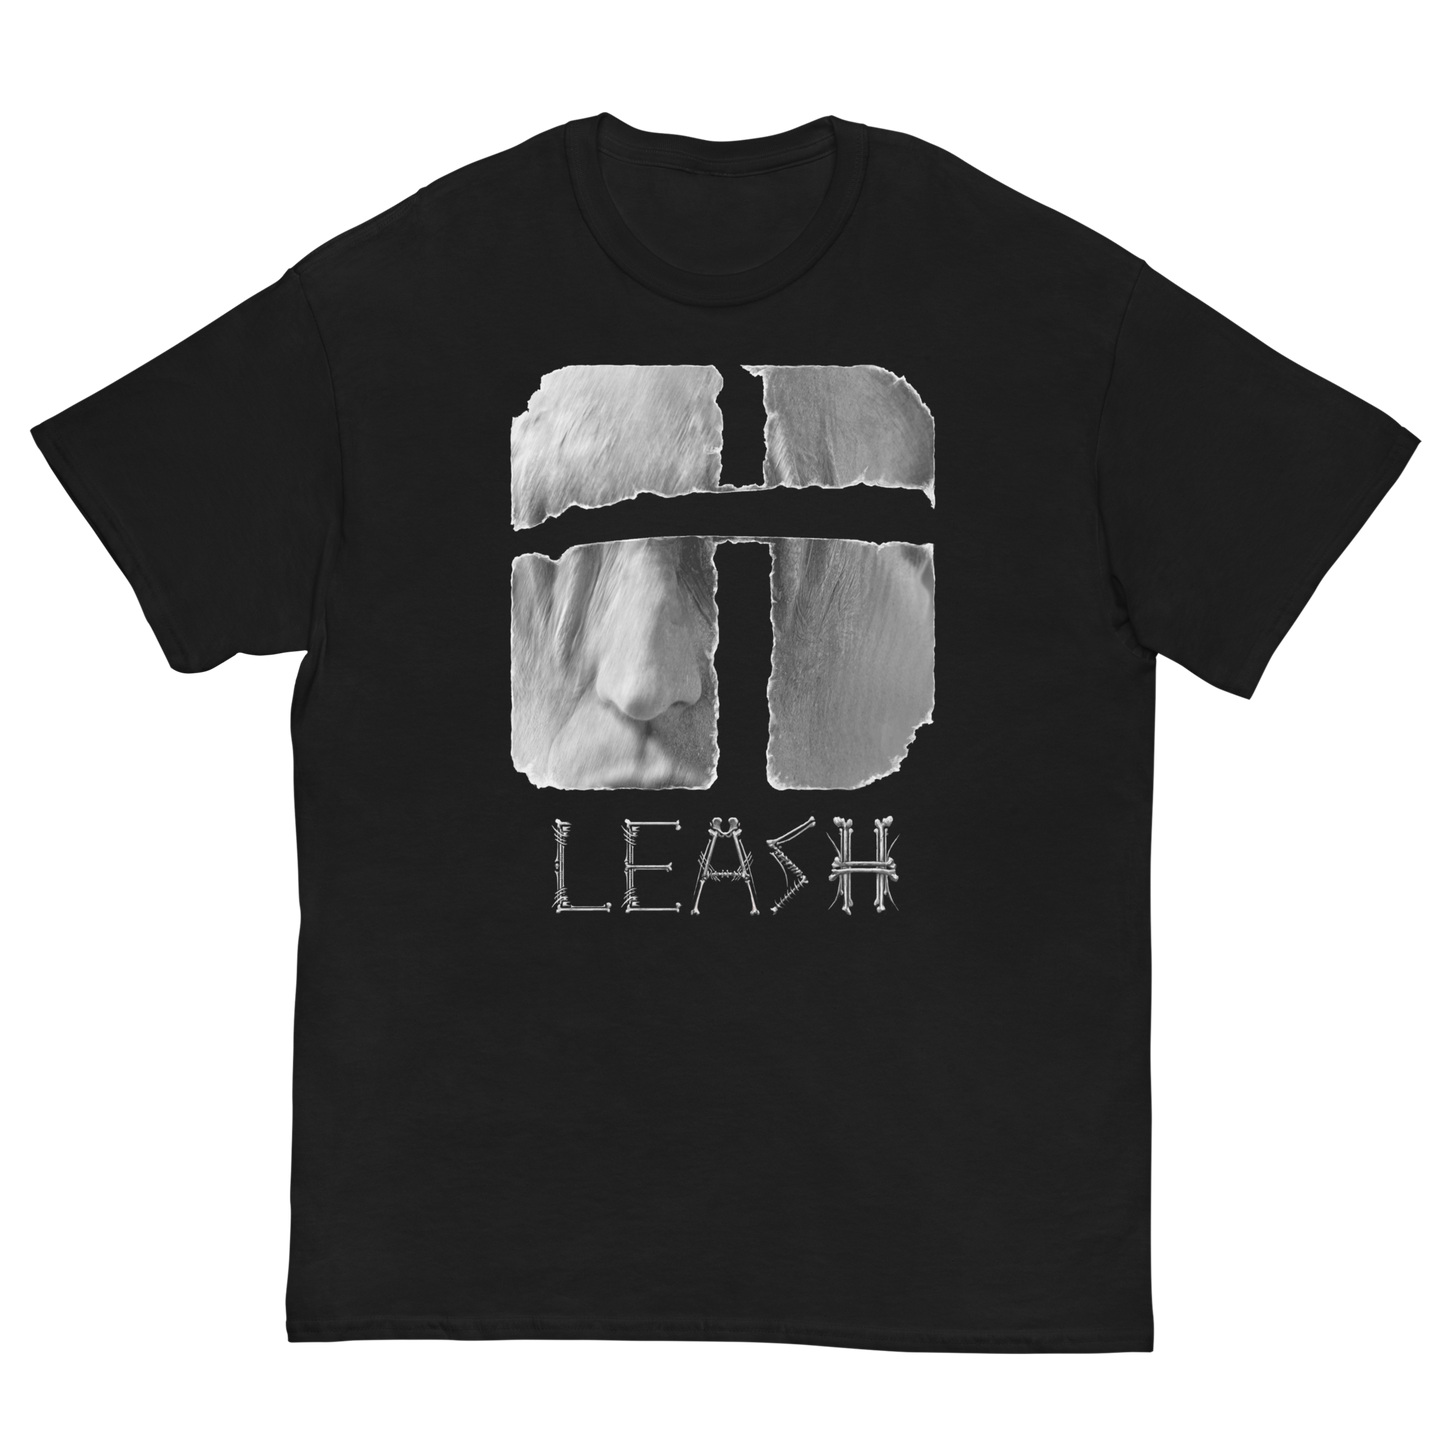 The Hate Club - Leash T-Shirt